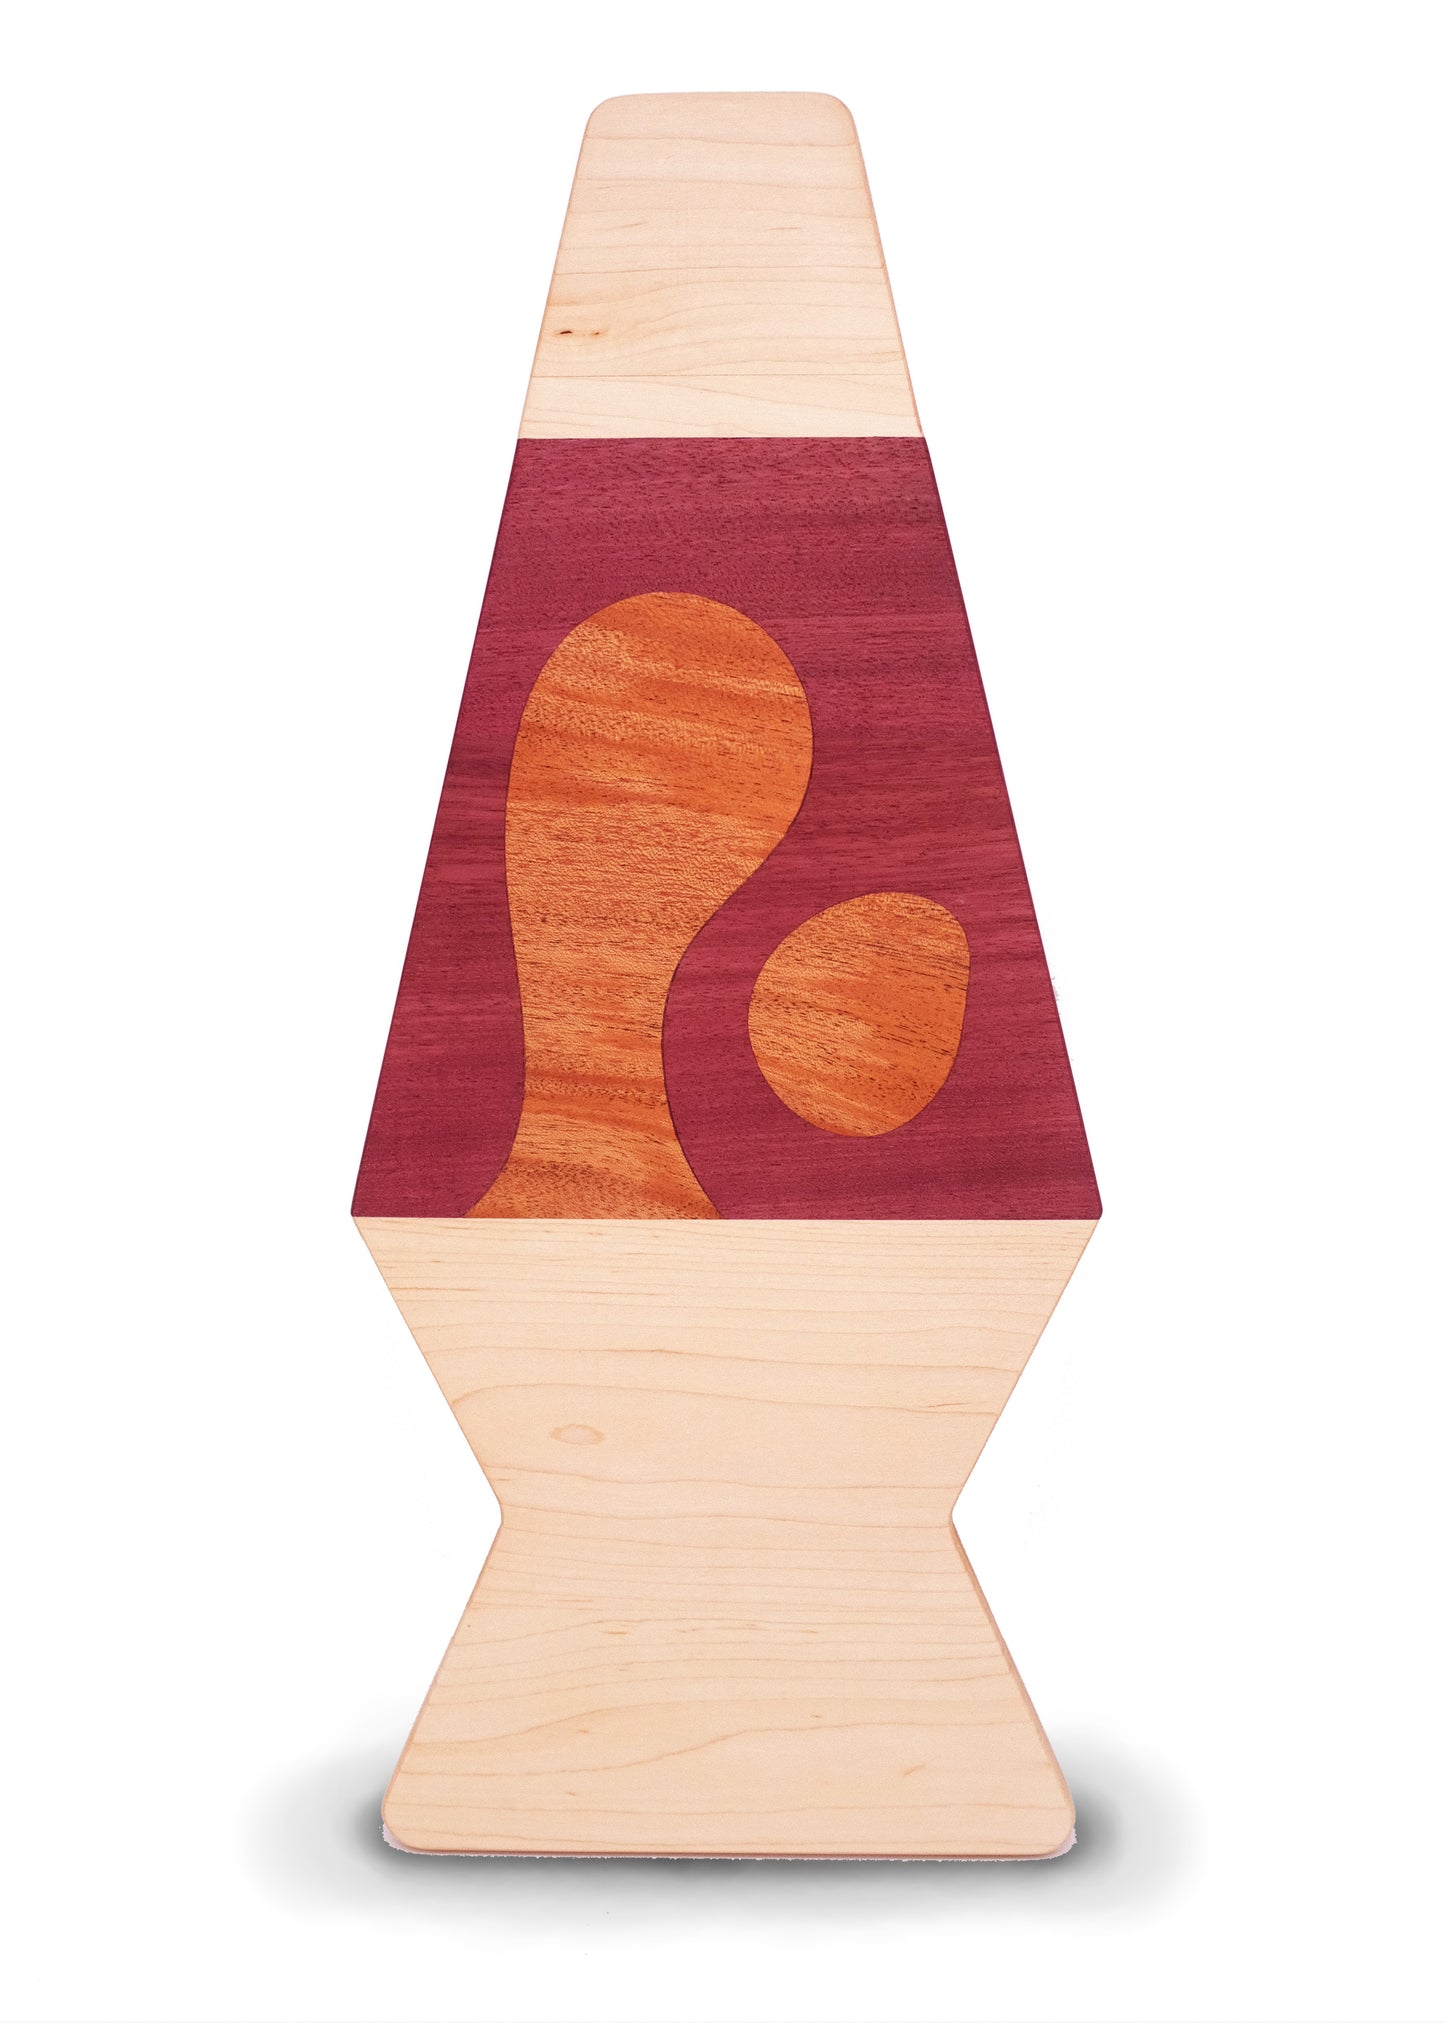 lava lamp shaped cutting board made of purpleheart, maple and mahogany